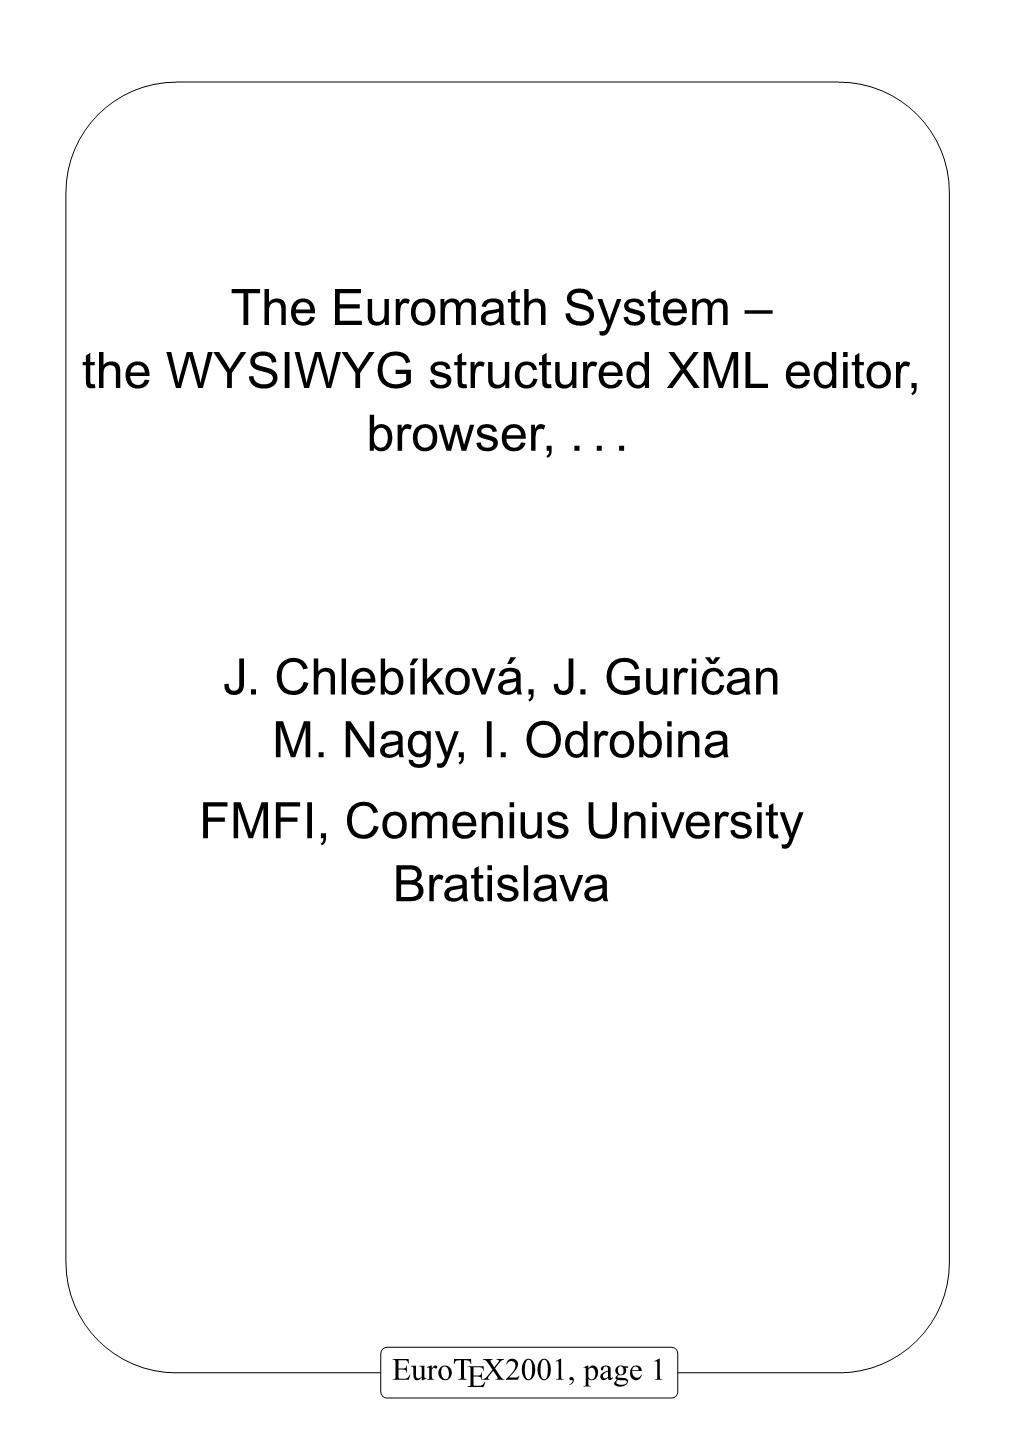 The Euromath System – the WYSIWYG Structured XML Editor, Browser, . . . J. Chlebıkov´A, J. Guriˇcan M. Nagy, I. Odrobina FM